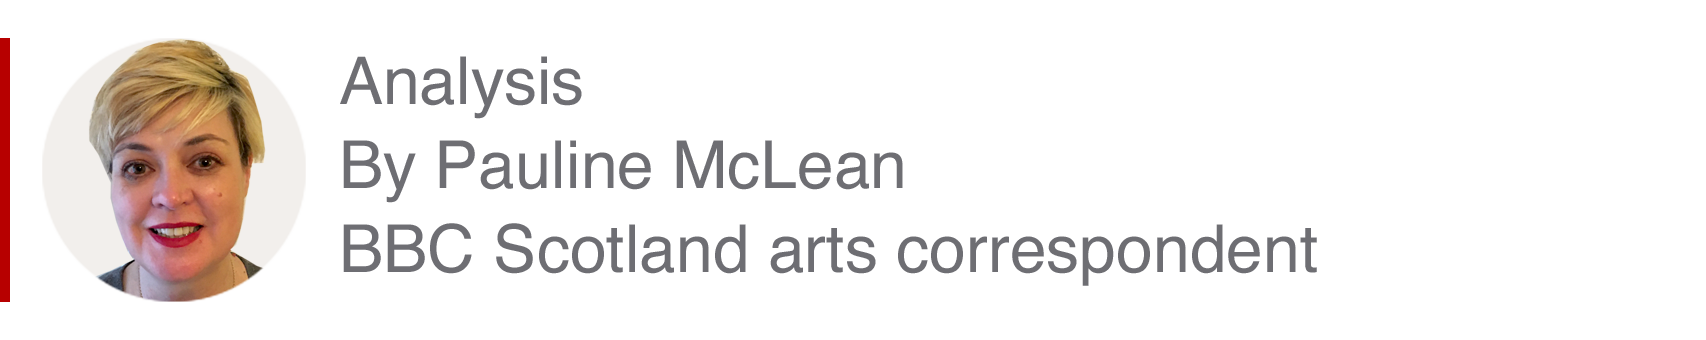 Analysis box by Pauline McLean, BBC Scotland arts correspondent